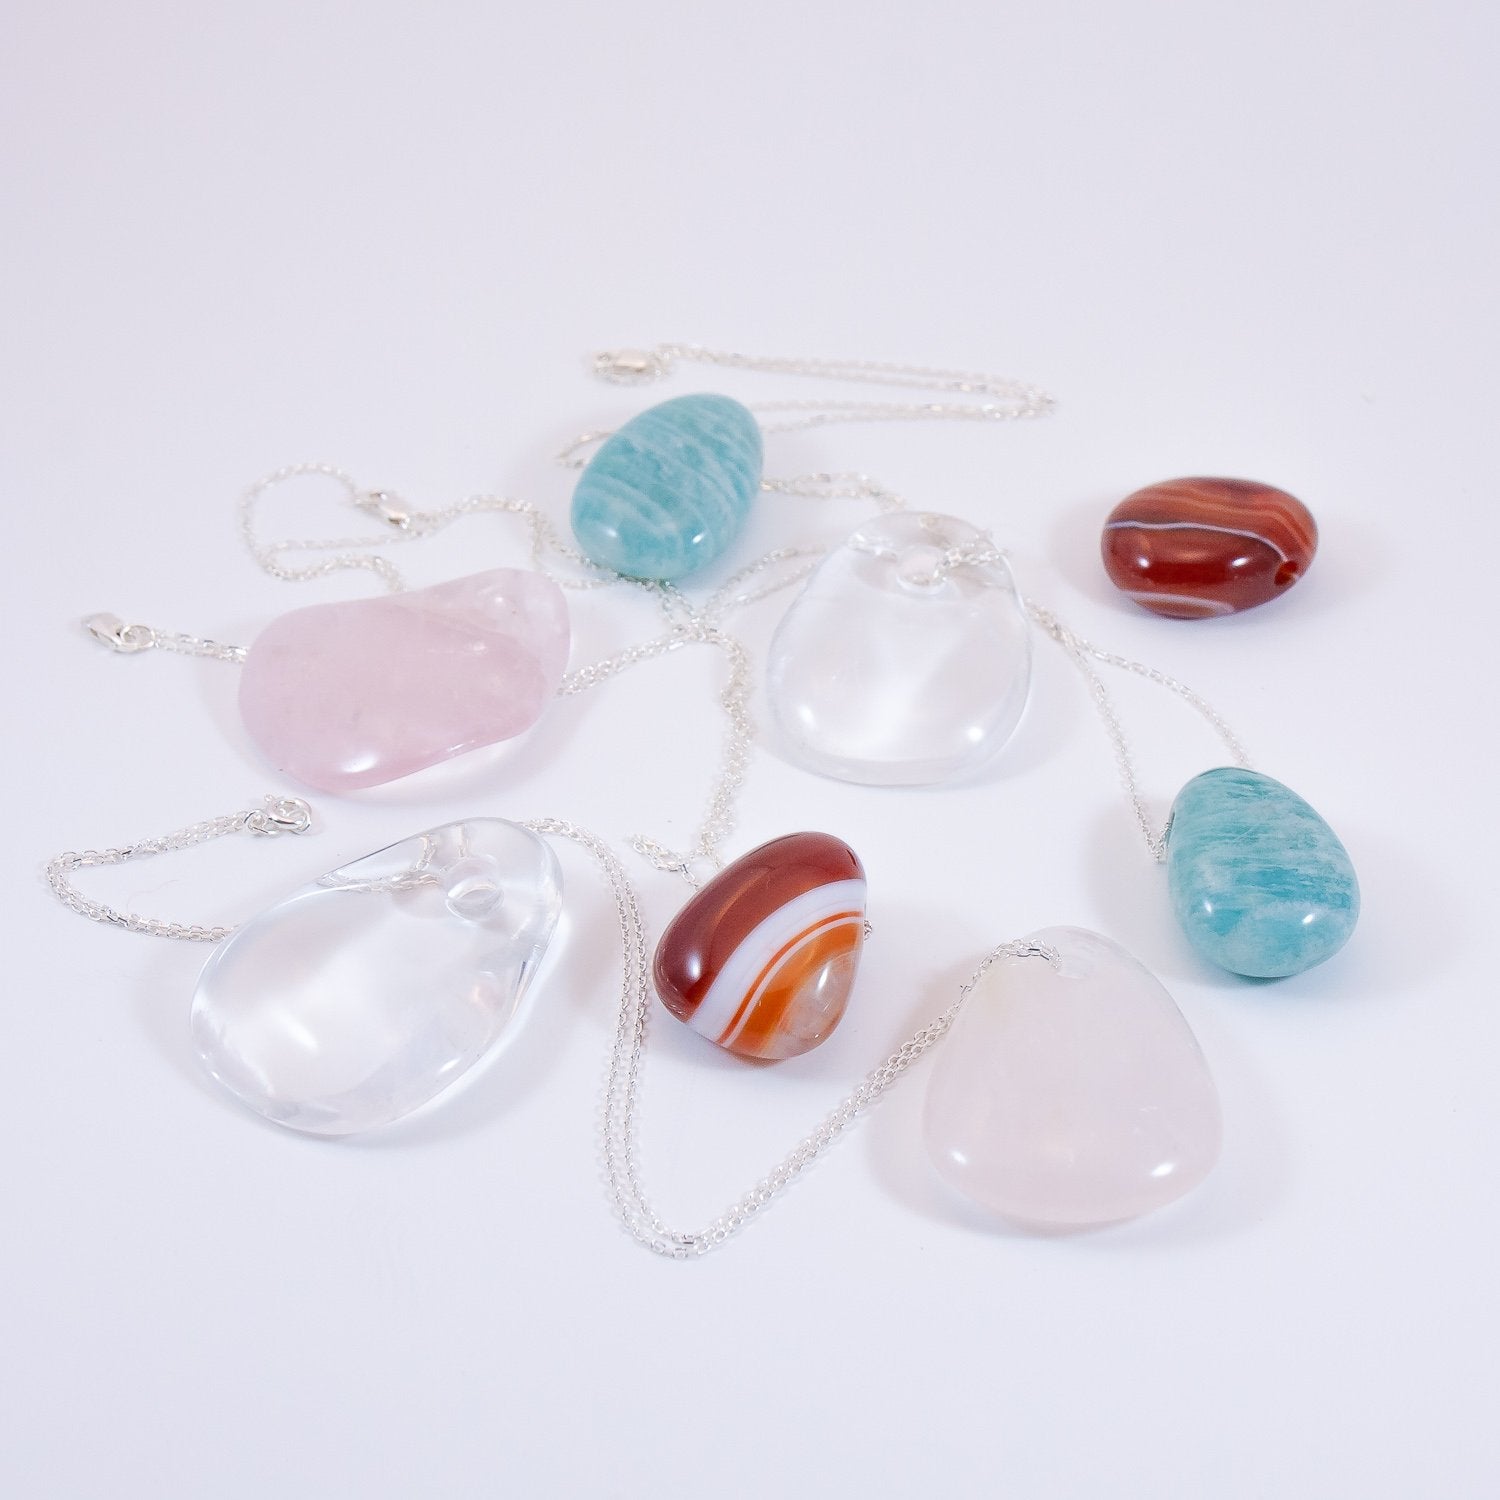 Crystal drop pendant necklaces. Amazonite, carnelian, clear quartz, rose quartz.